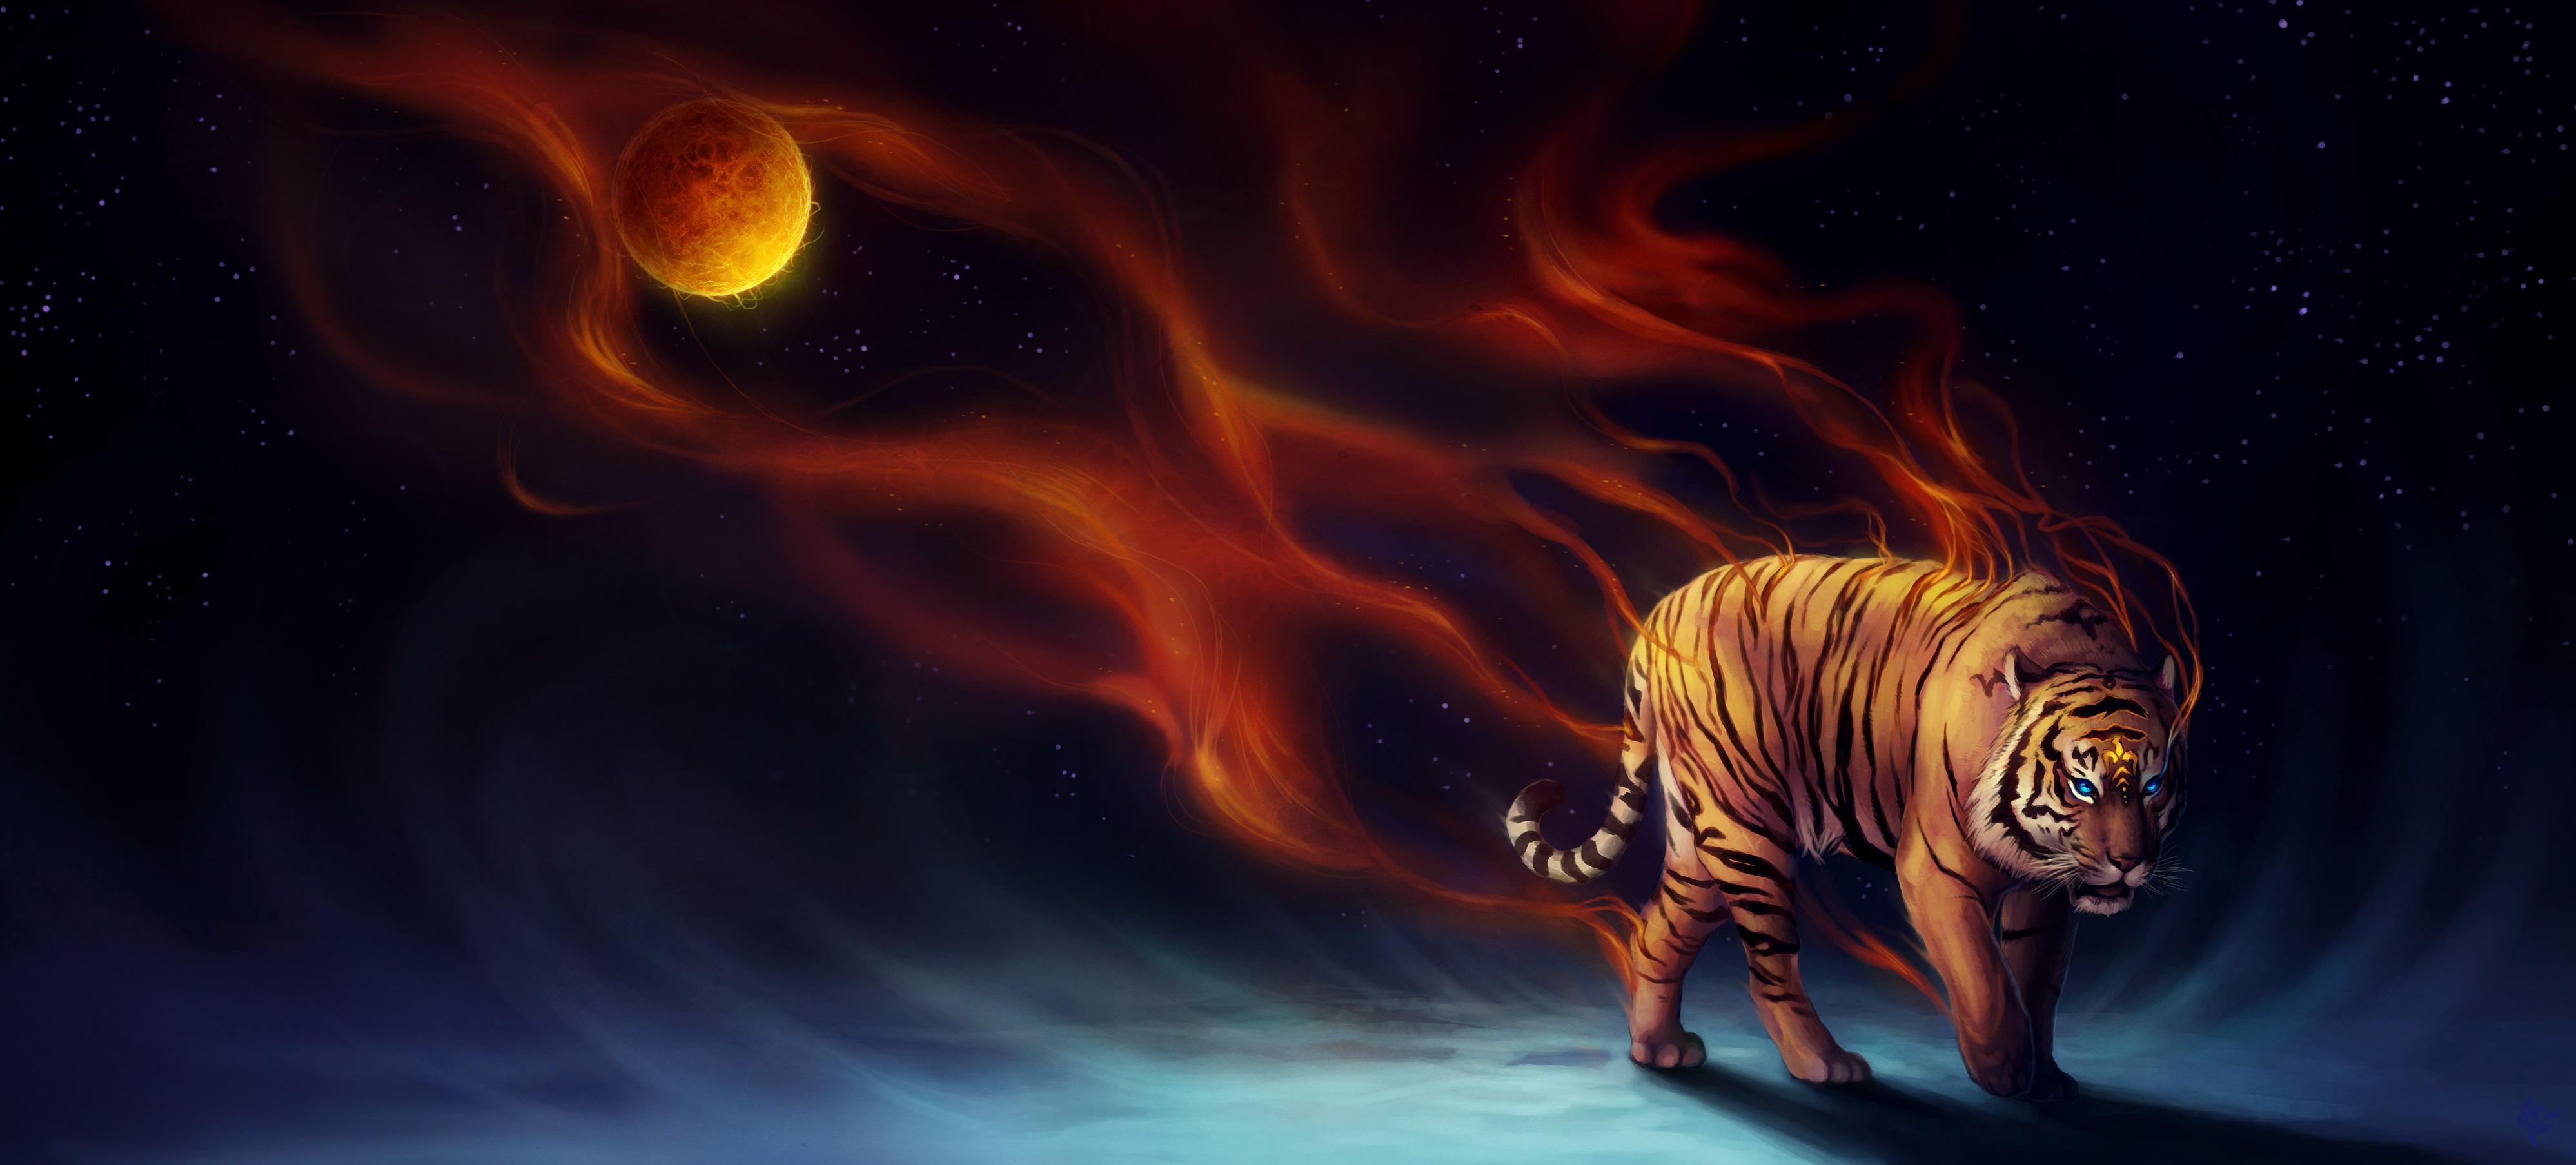 Tiger Fantasy Magical Flame 4k, HD Artist, 4k Wallpaper